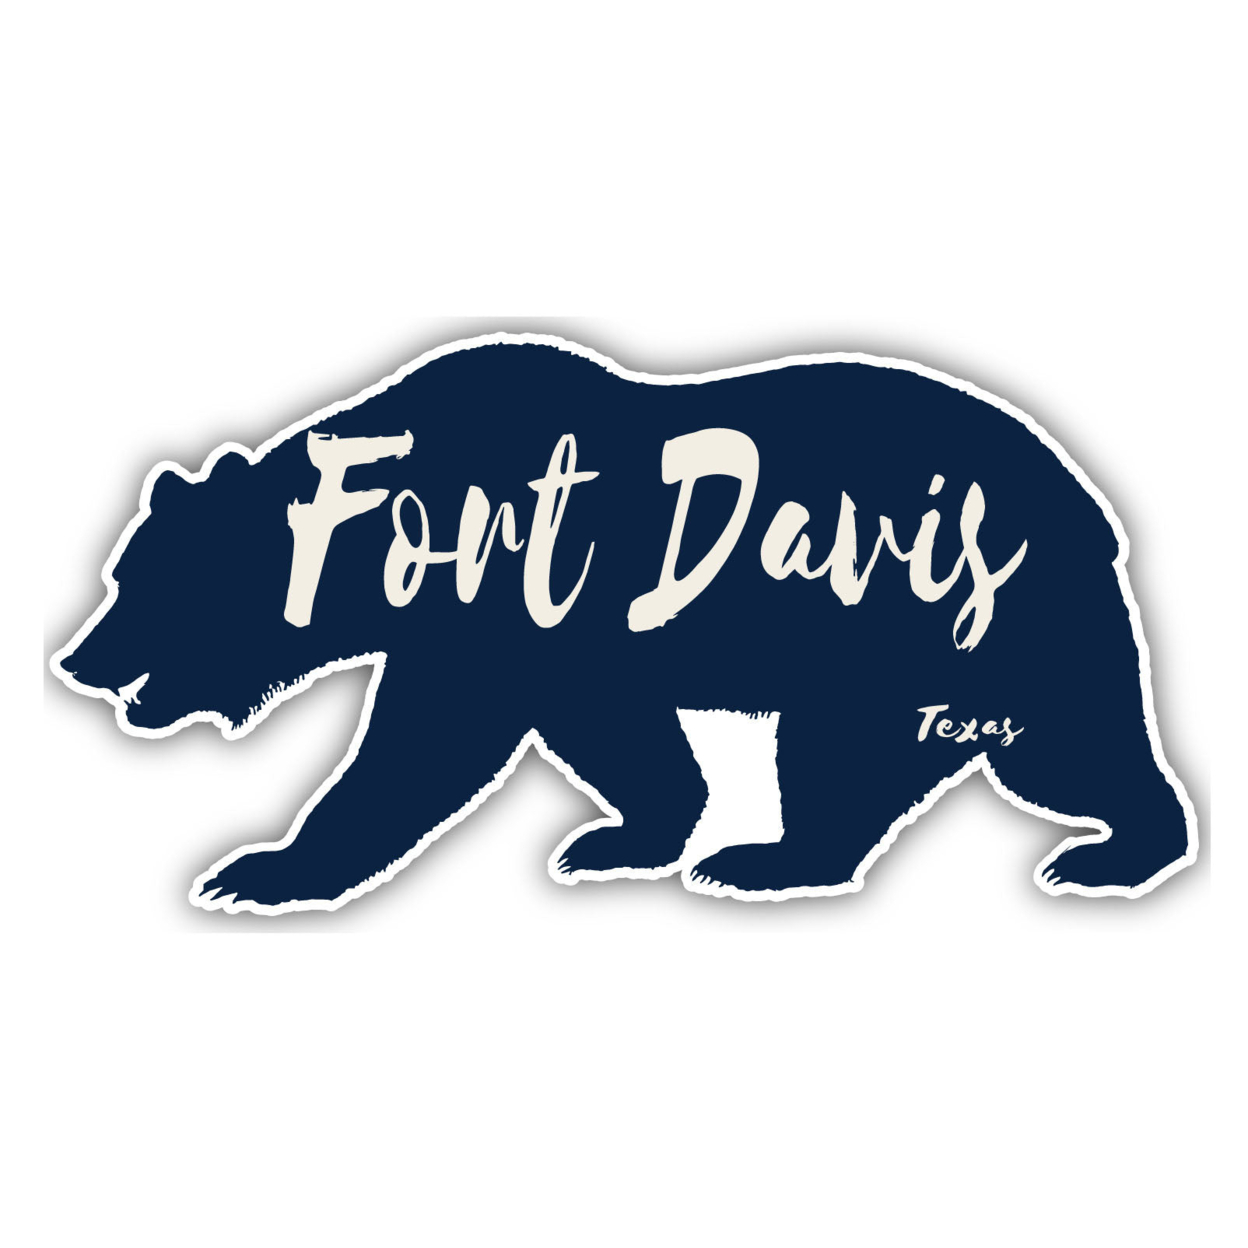 Fort Davis Texas Souvenir Decorative Stickers (Choose Theme And Size) - Single Unit, 2-Inch, Bear